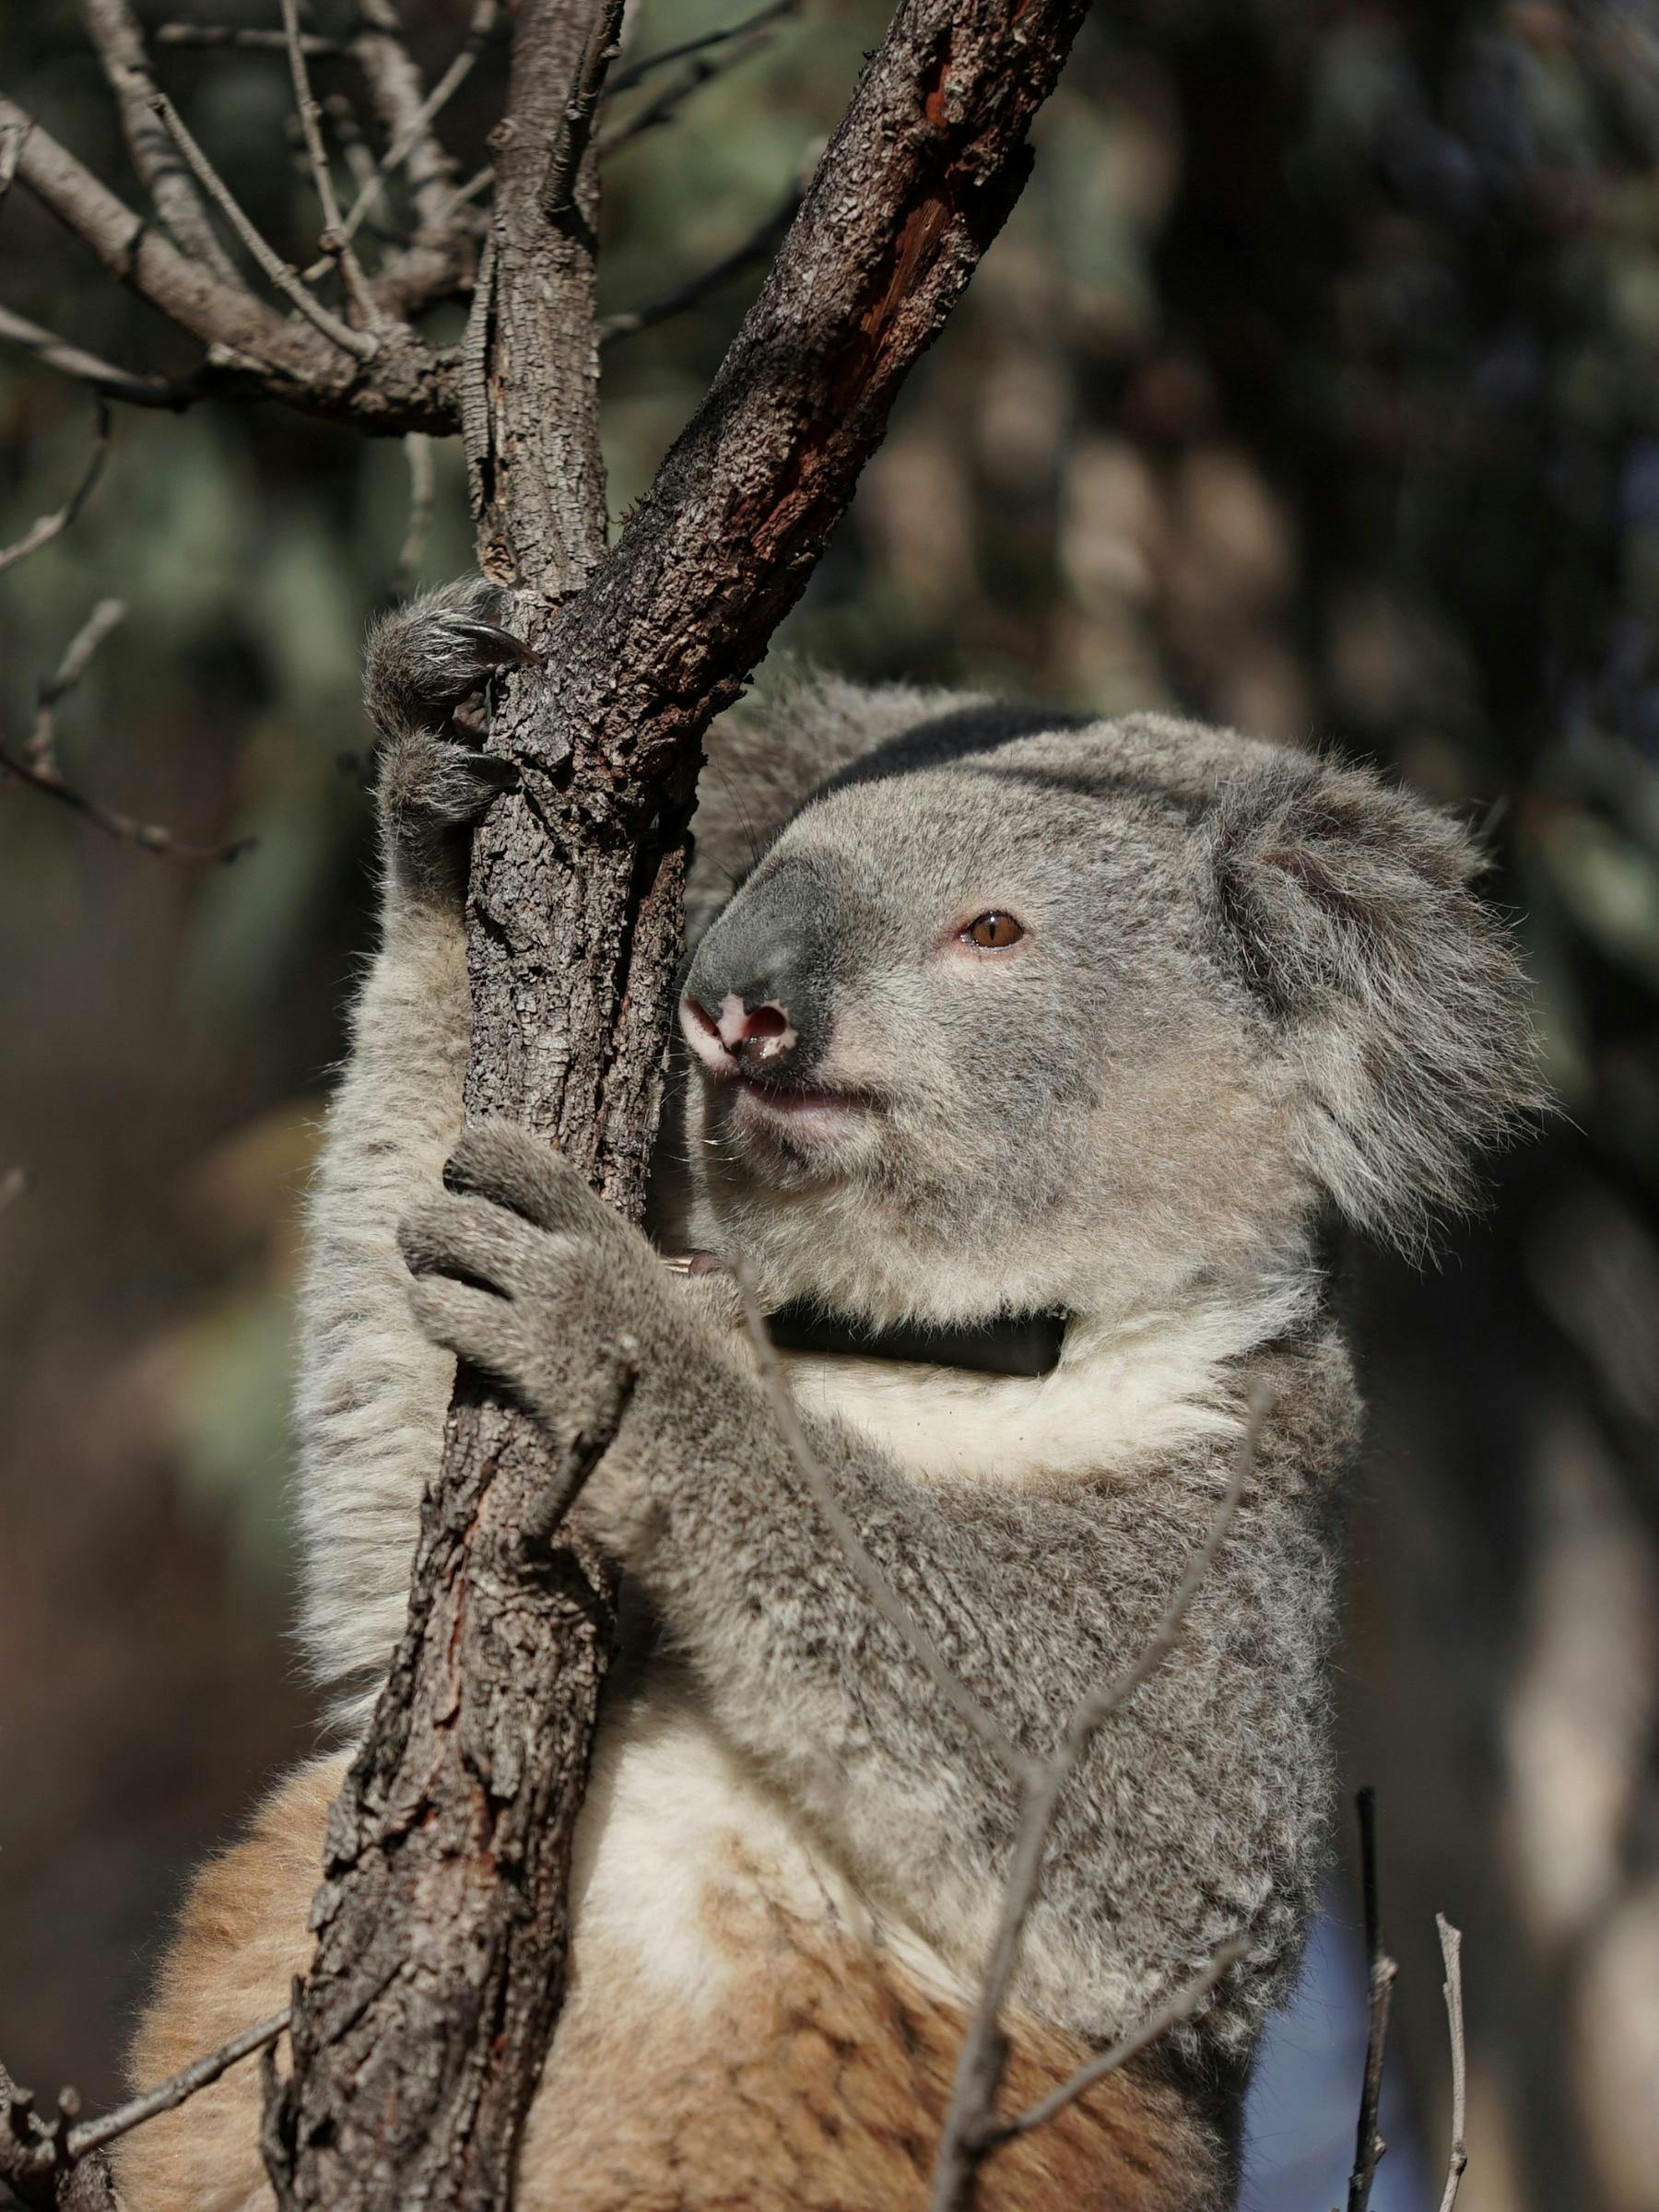 A koala wearing a black tracking collar clings onto a thin tree branch.